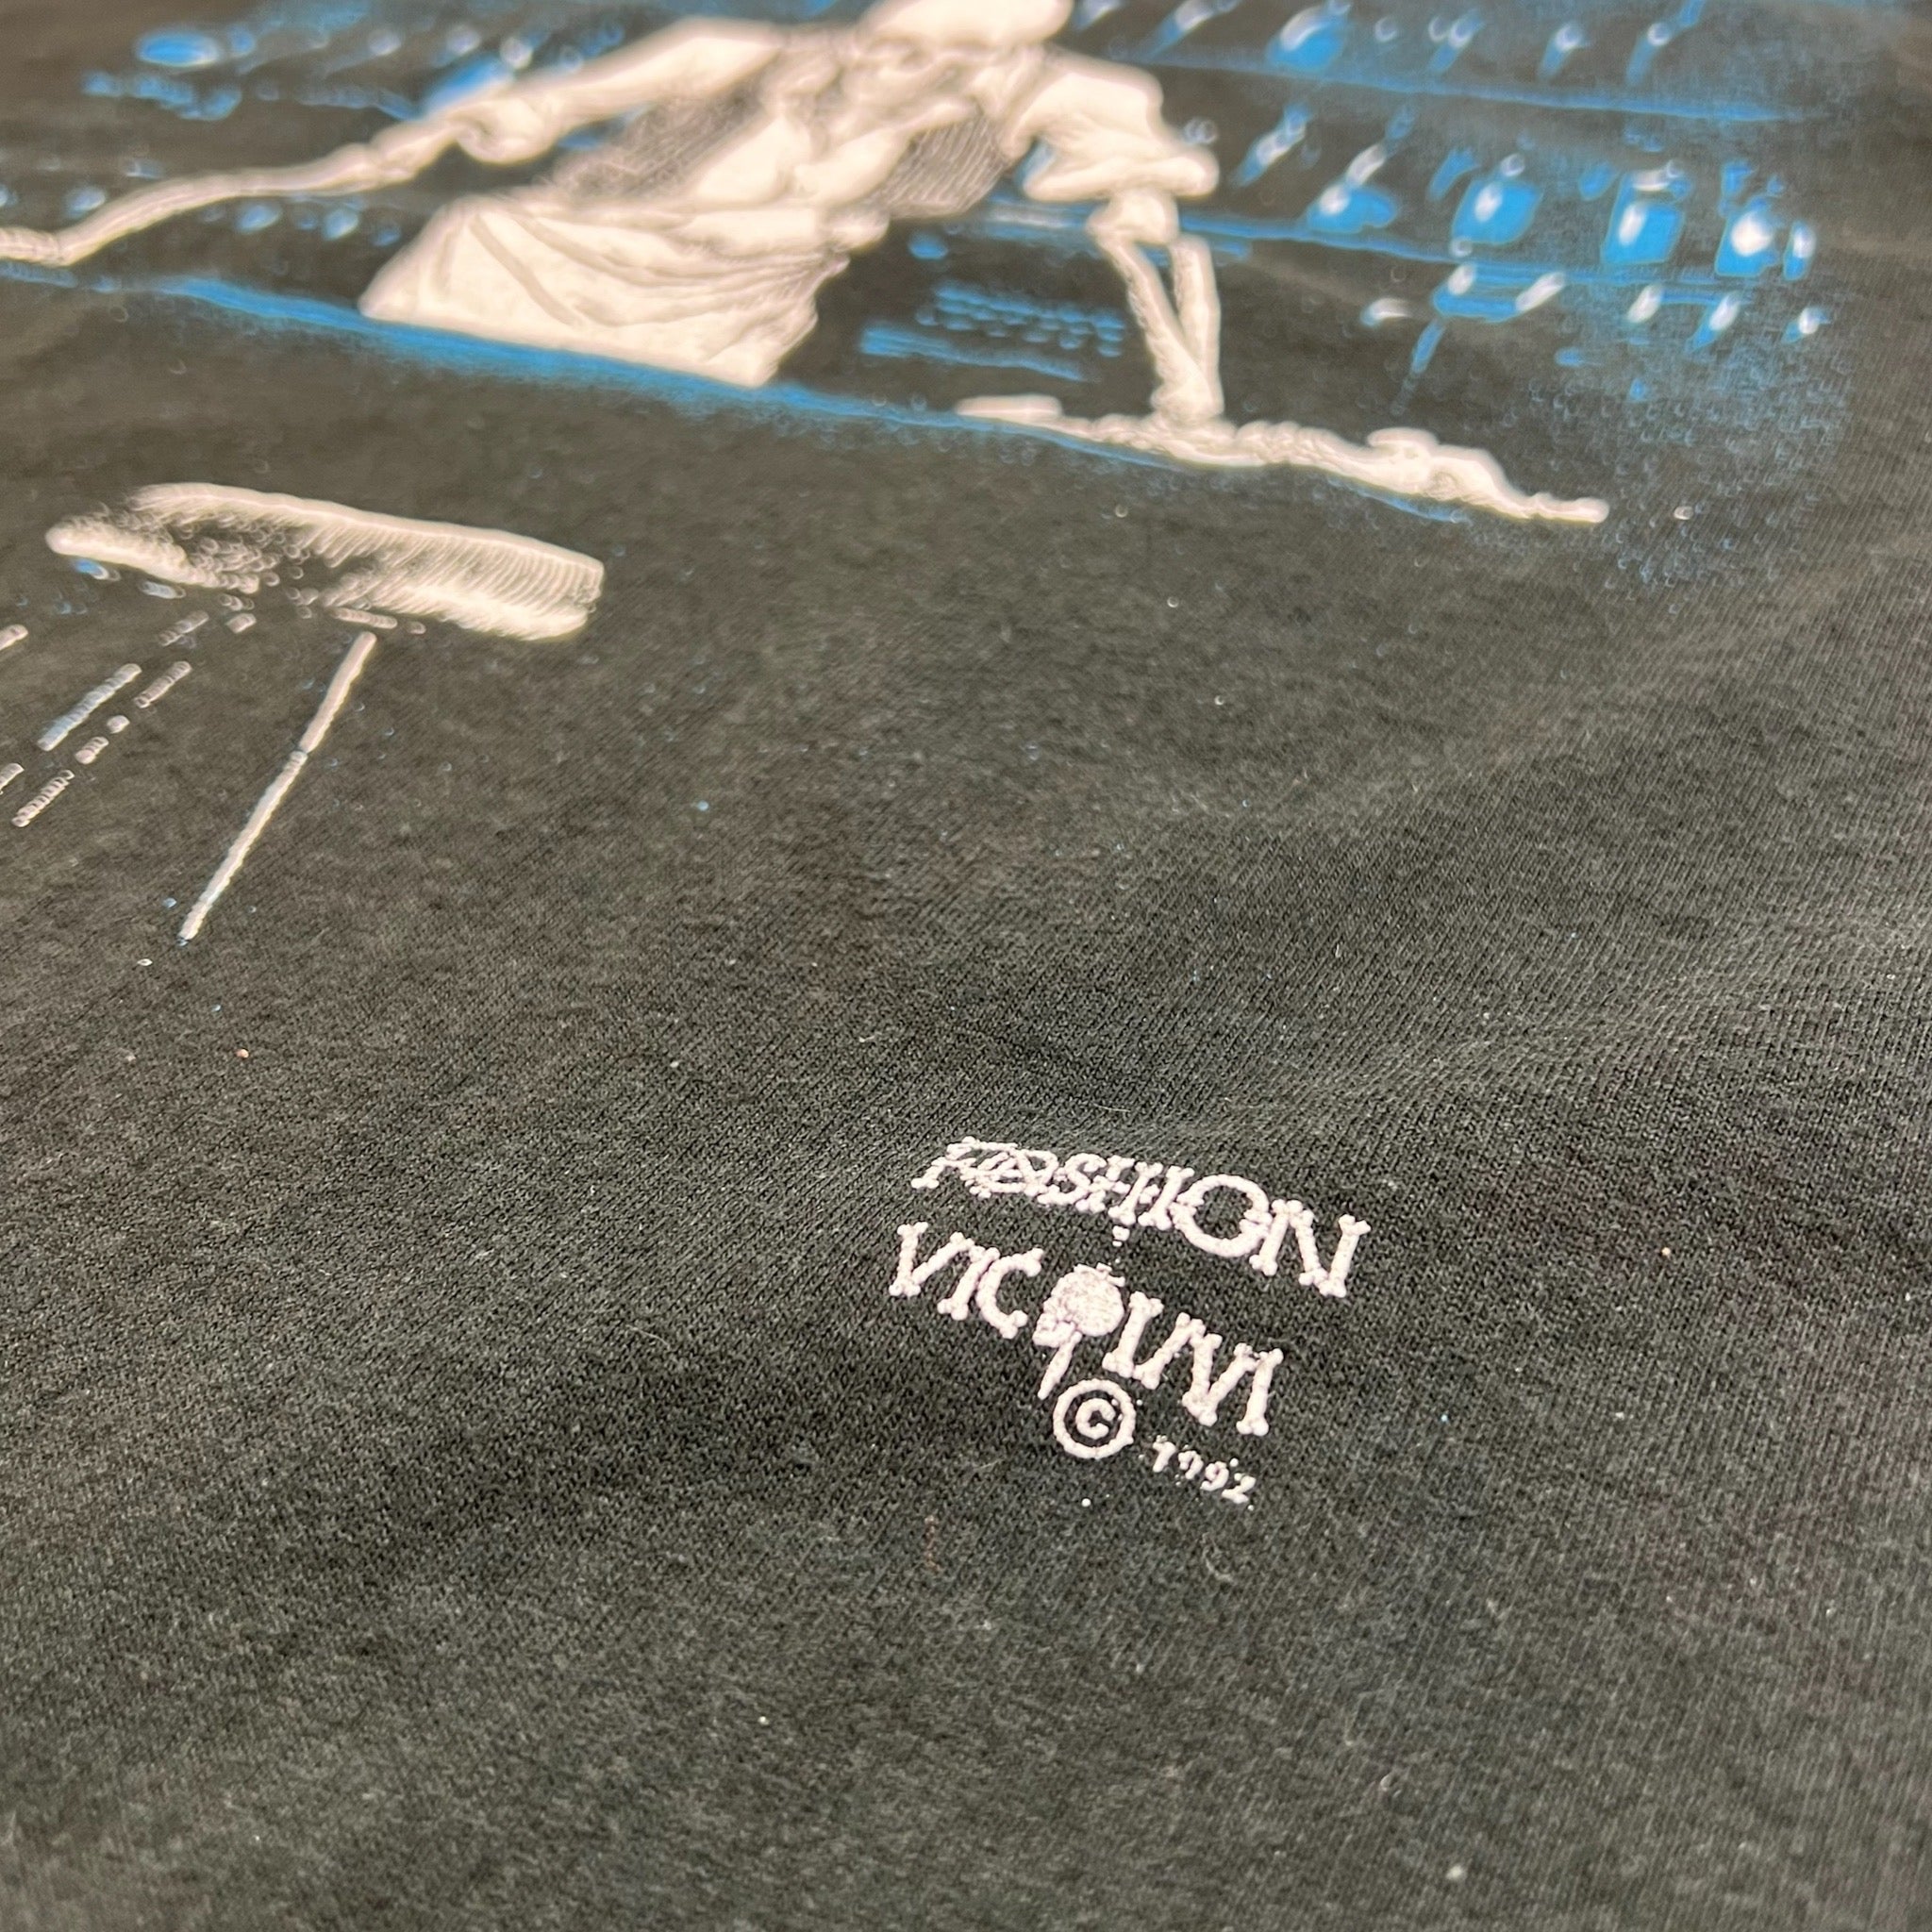 1992 Fashion Victims Name Your Poison T-shirt - Black & Blue Vintage Graphic T-Shirt